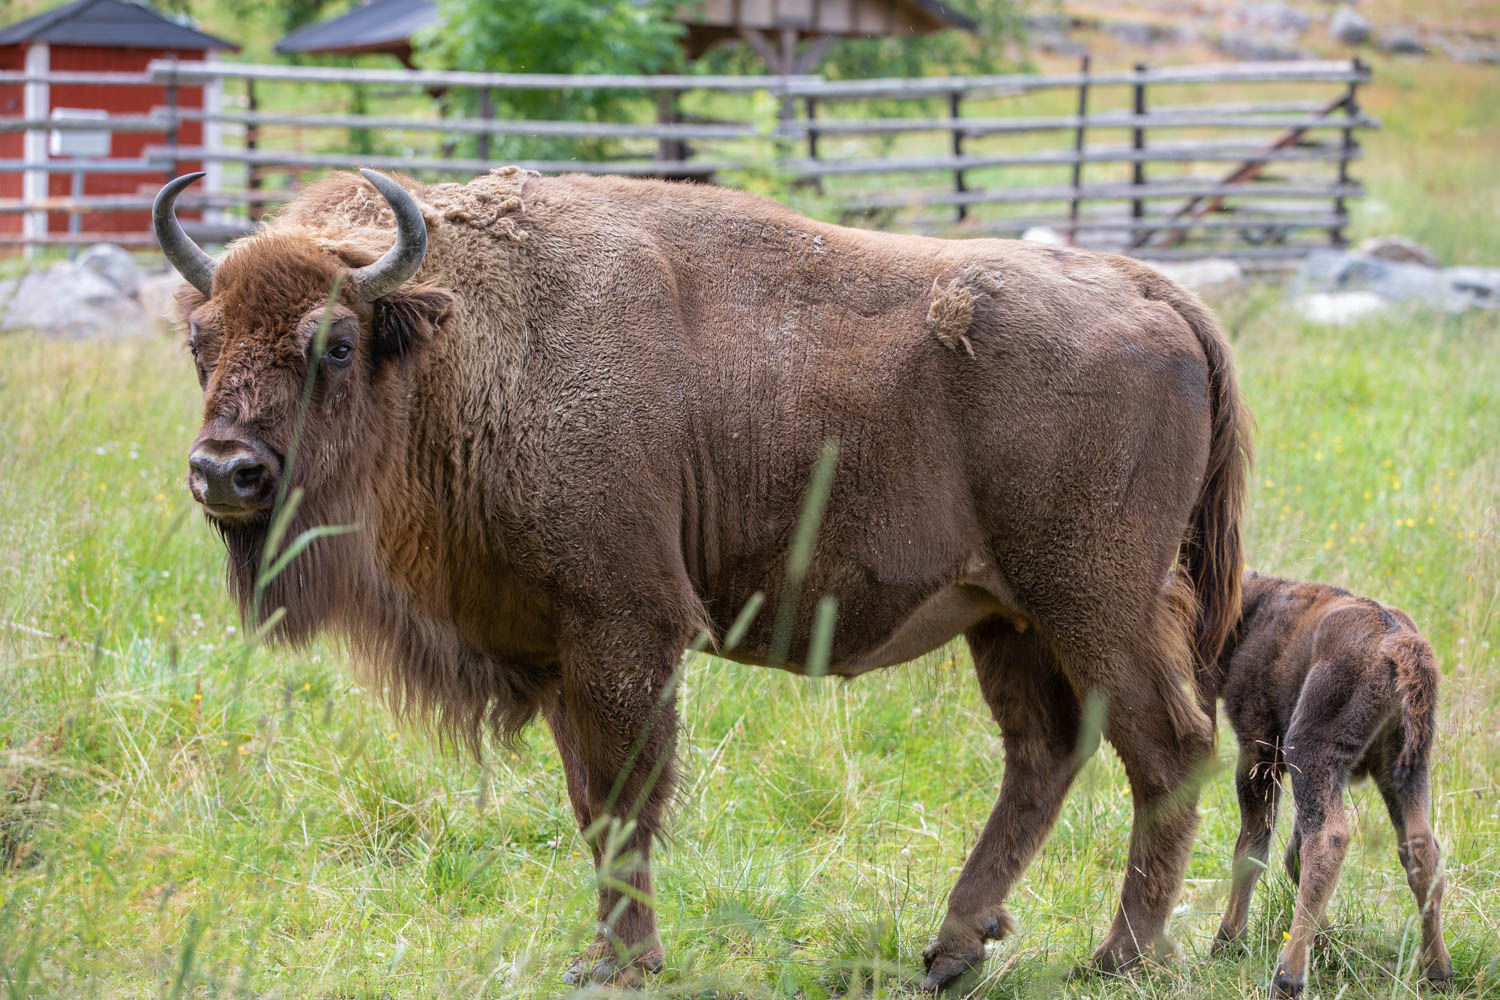 A European Bison with a bison baby at Avesta Visentpark